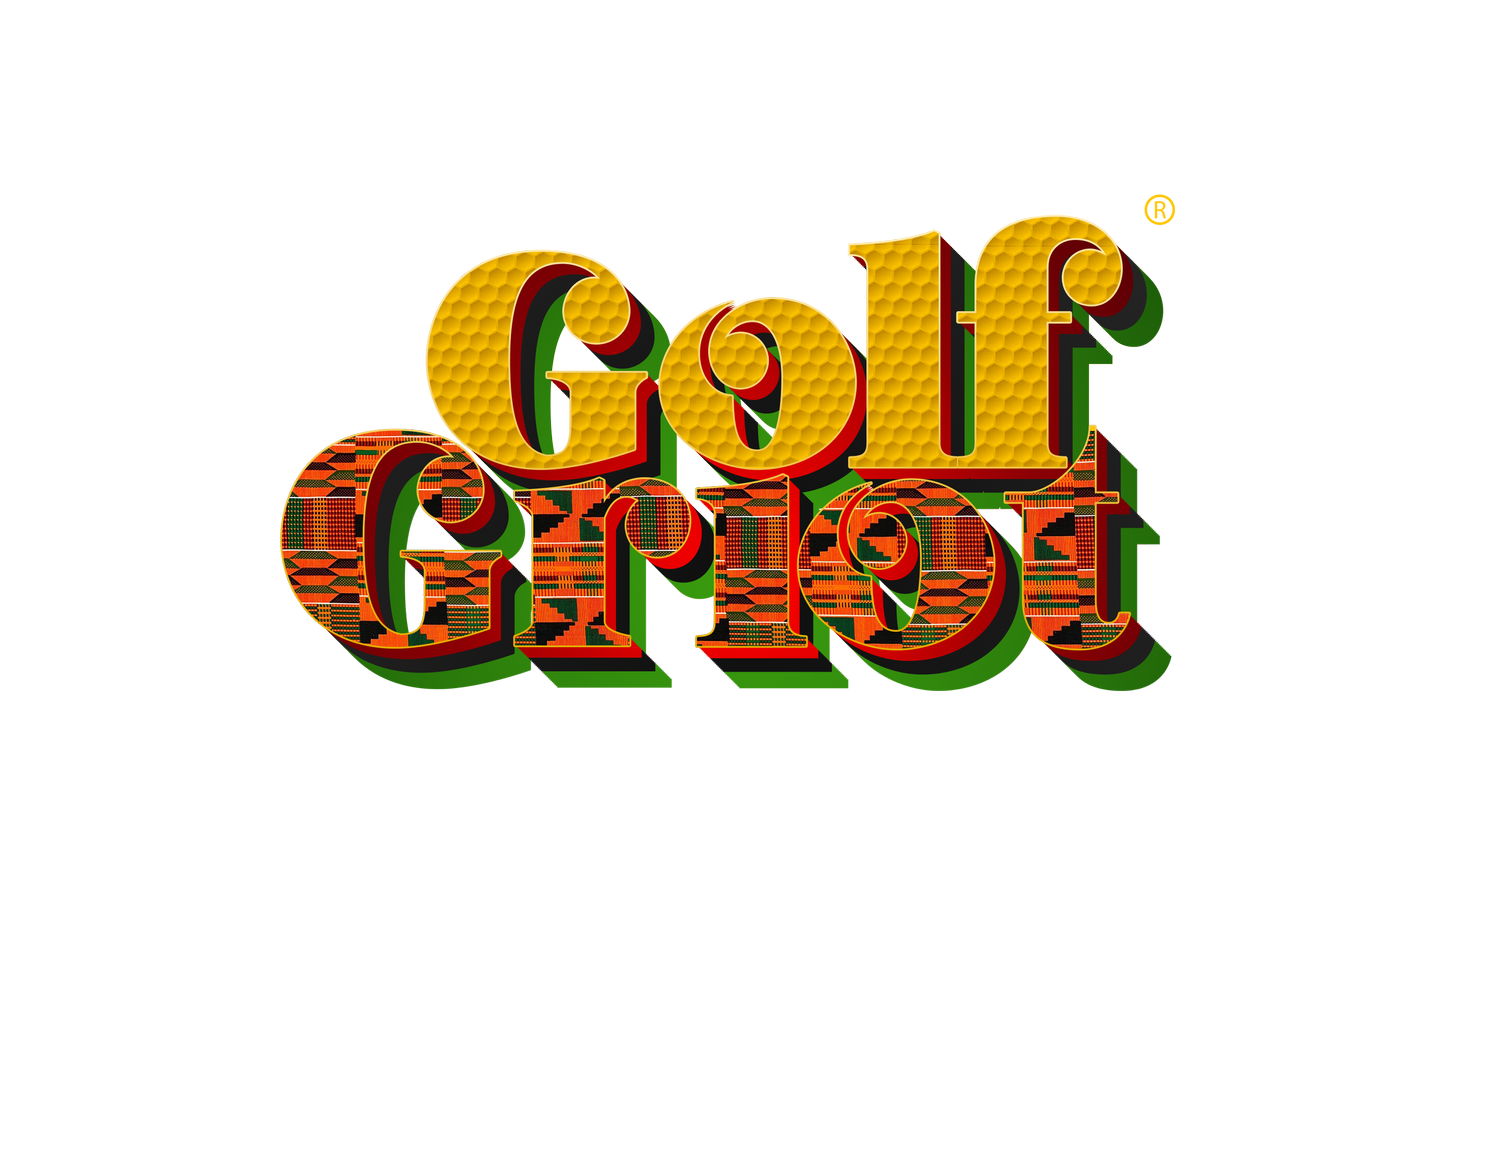 Golf Griot